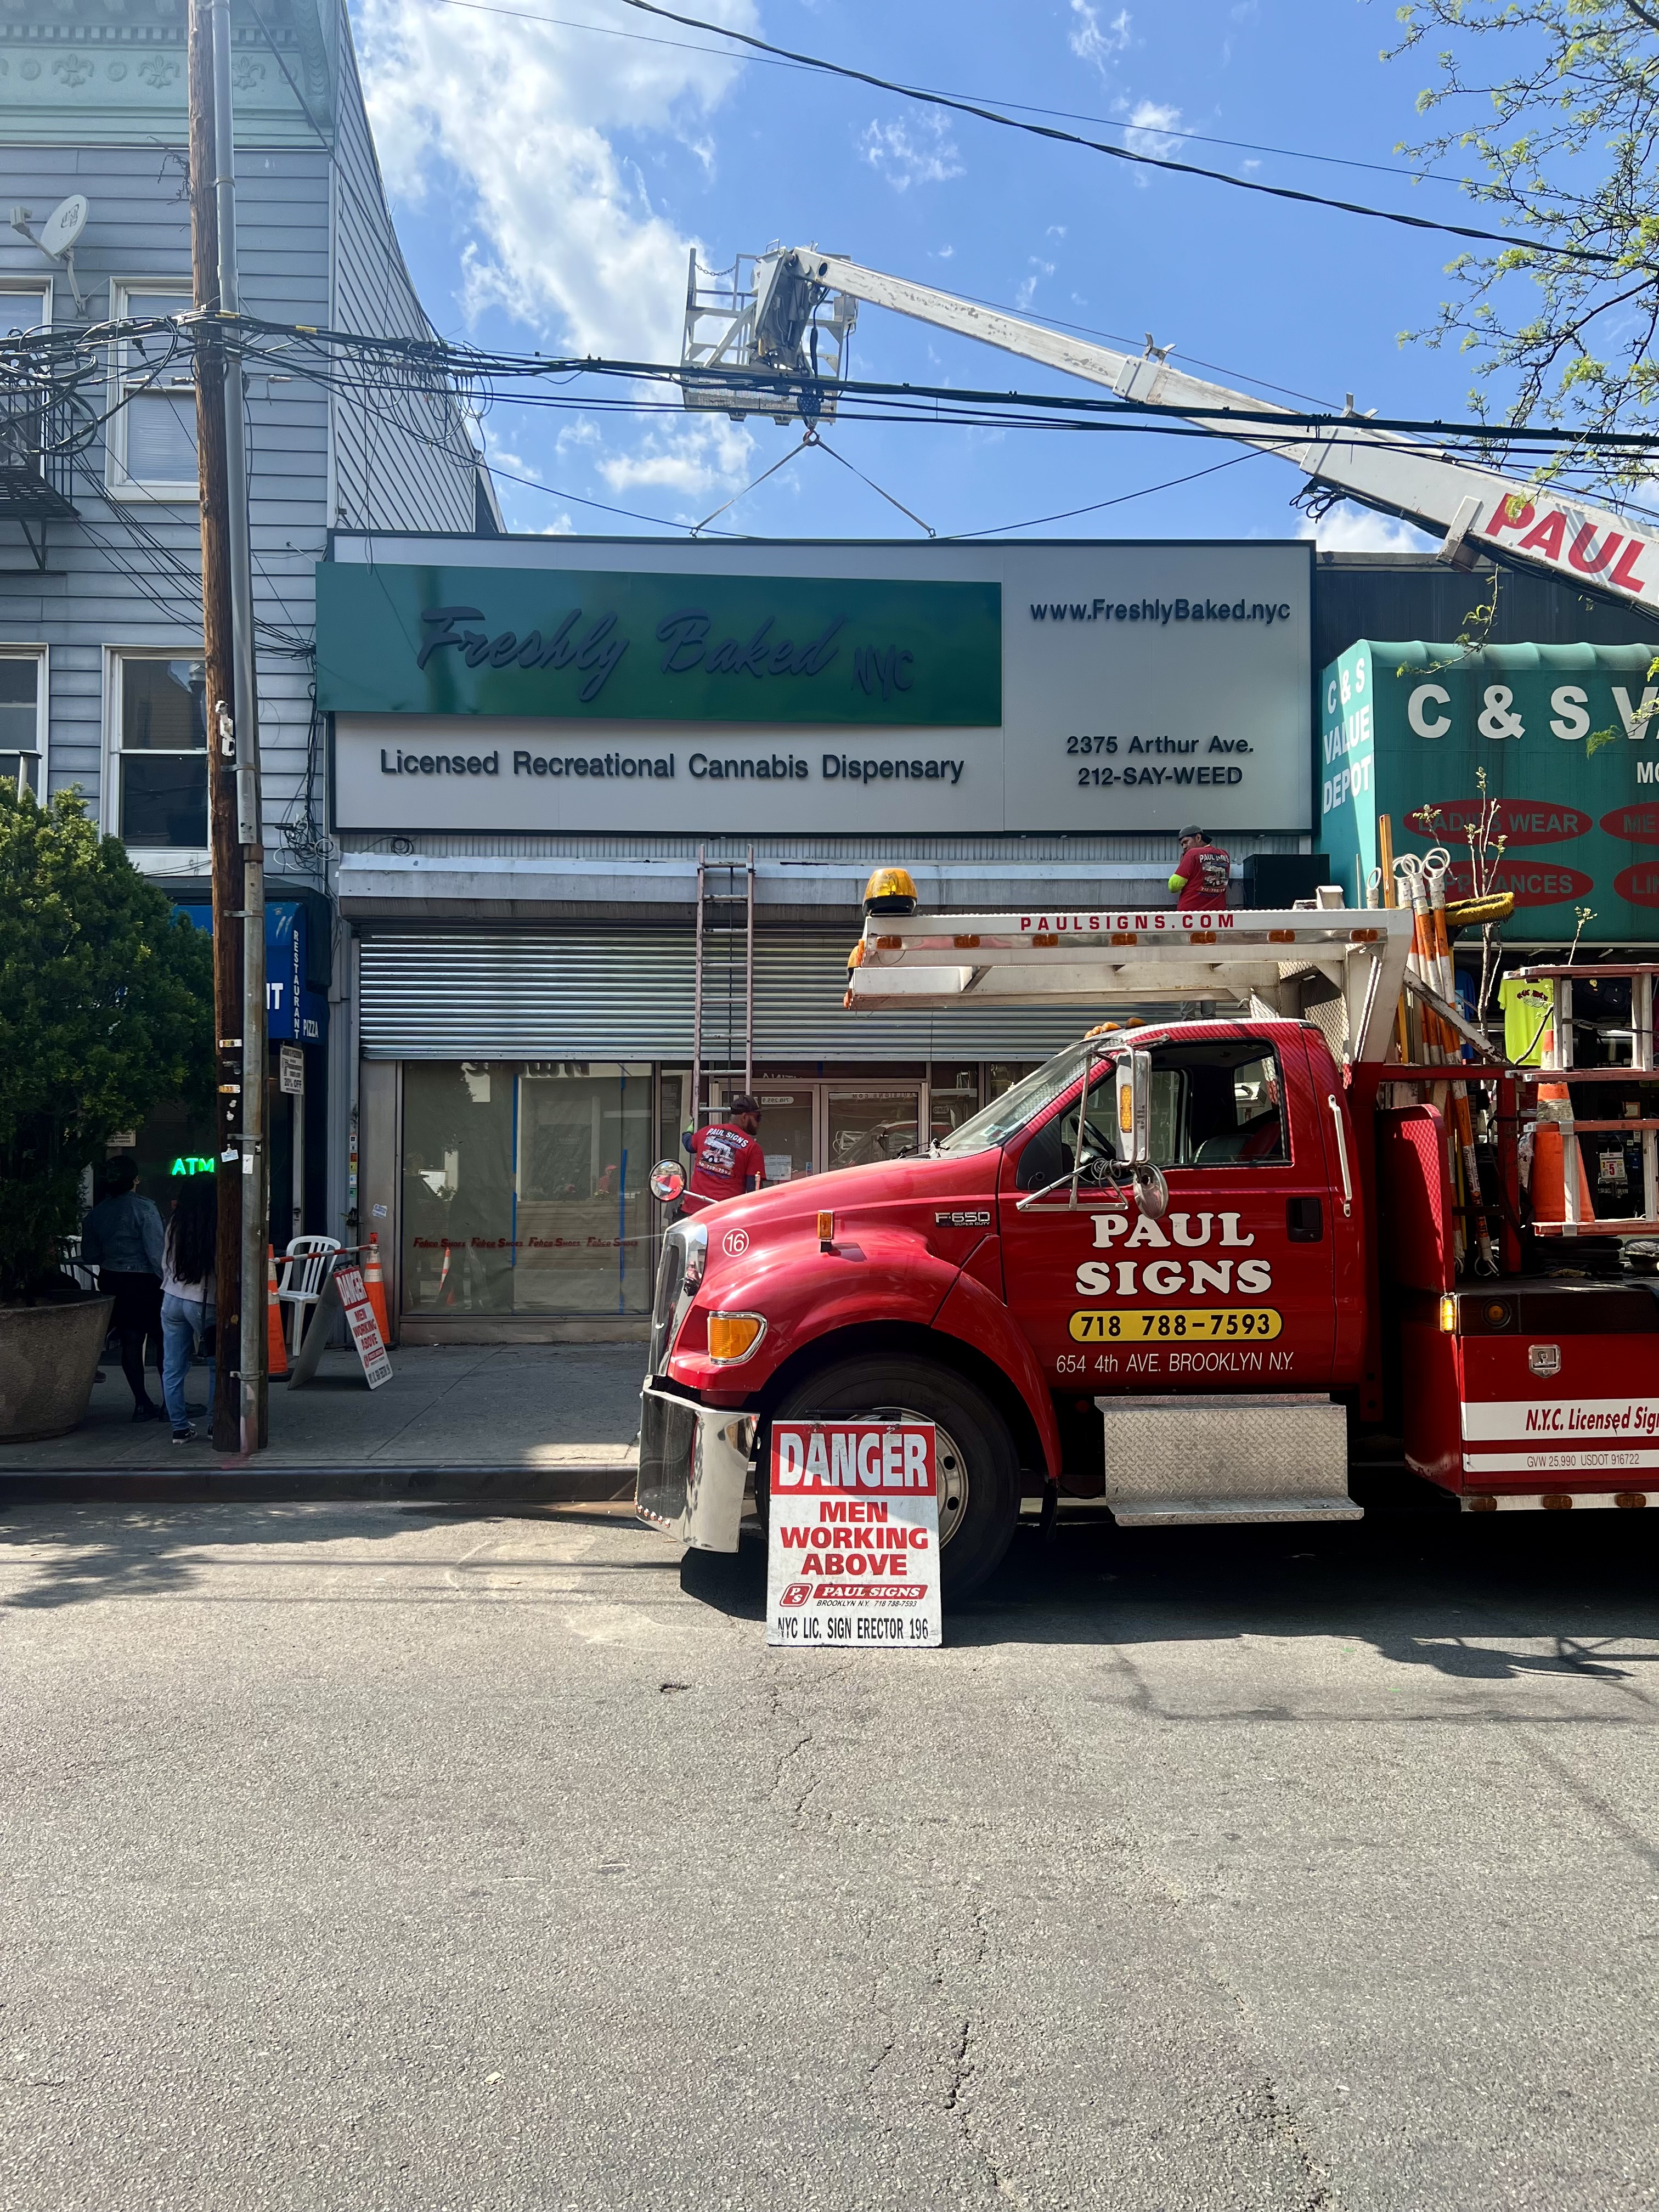 Crane Installs Freshly Baked NYC Sign